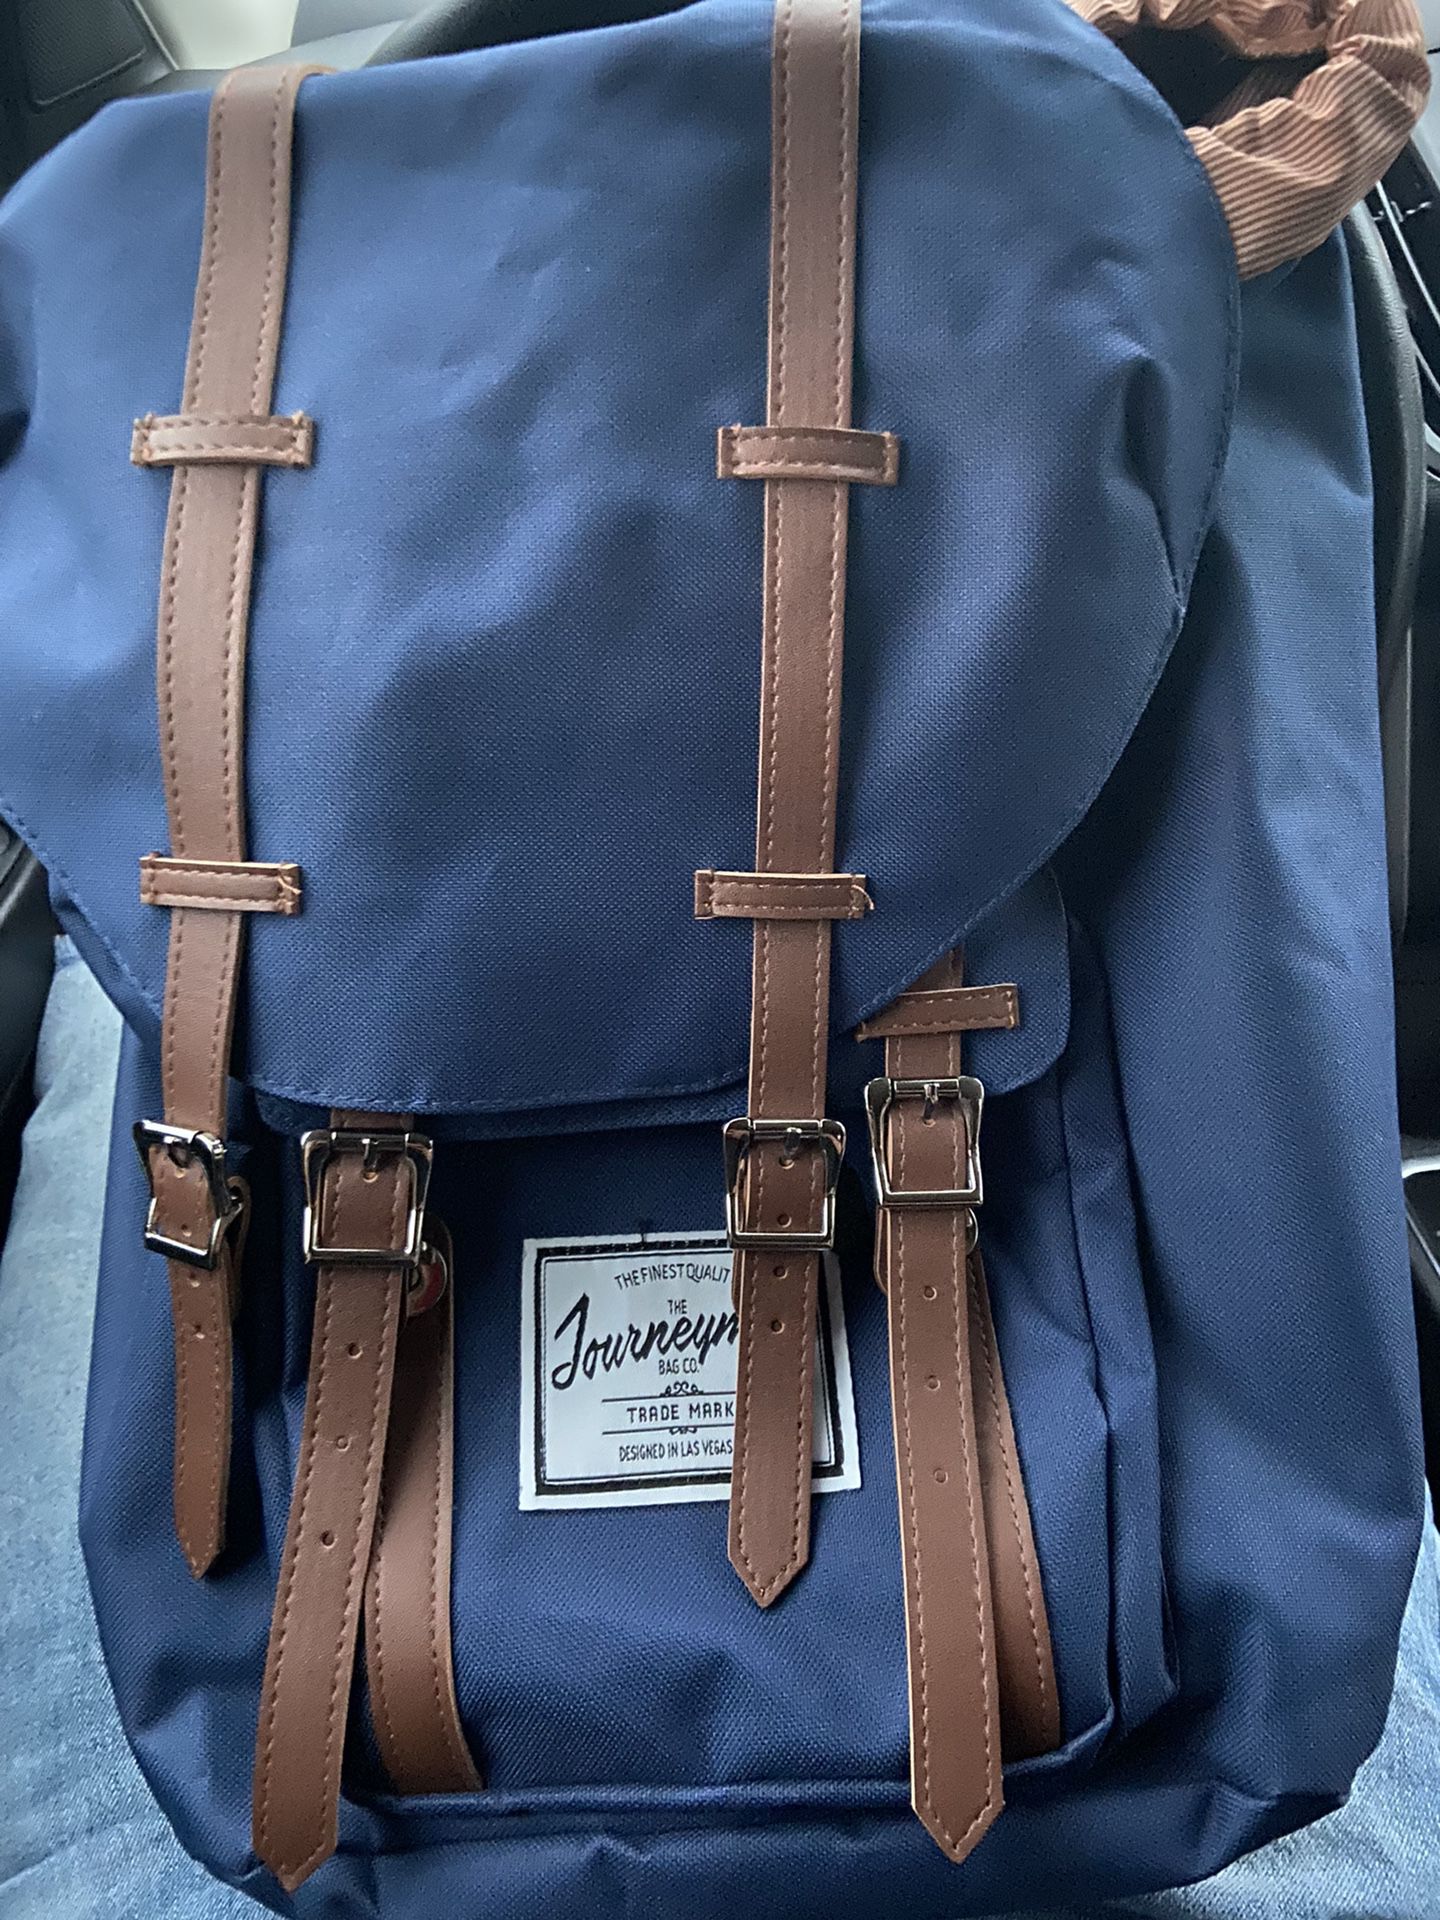 Journeyman’s Backpack 